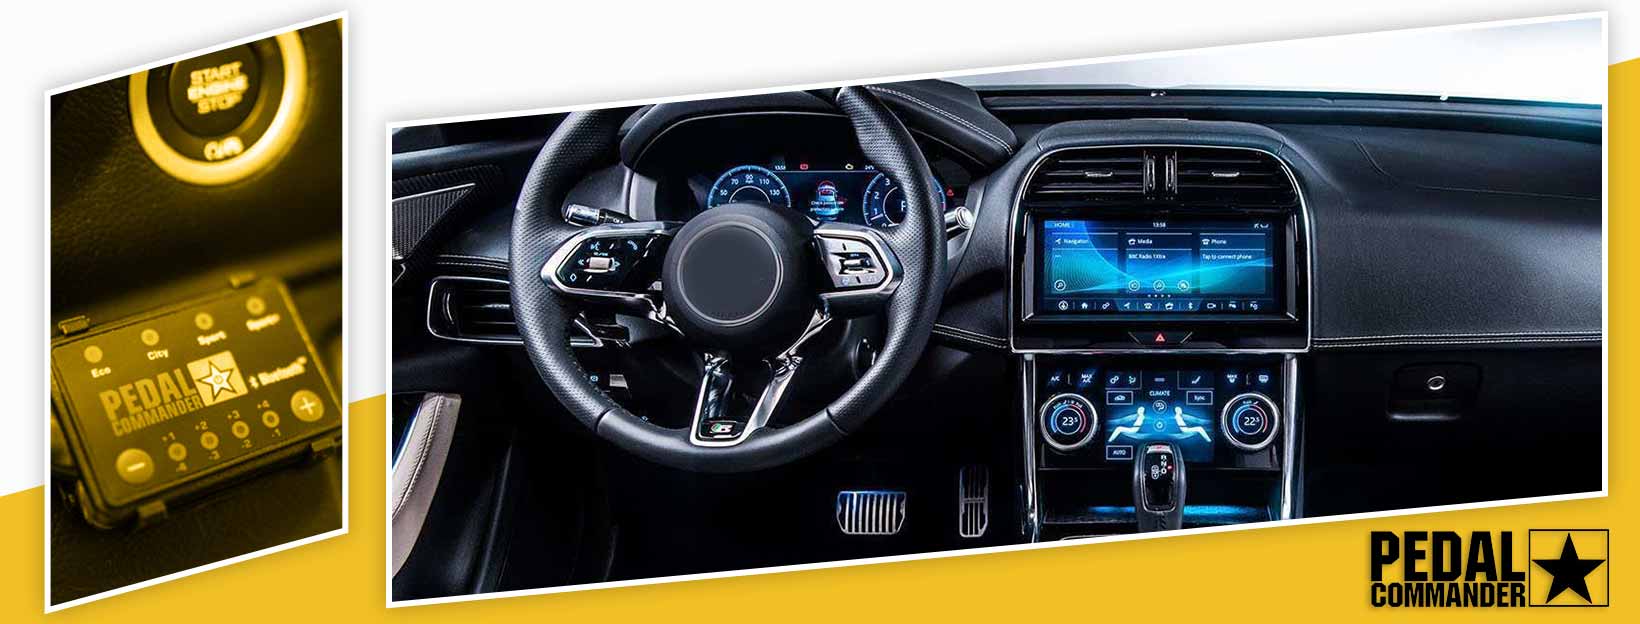 Pedal Commander for Jaguar XE - interior